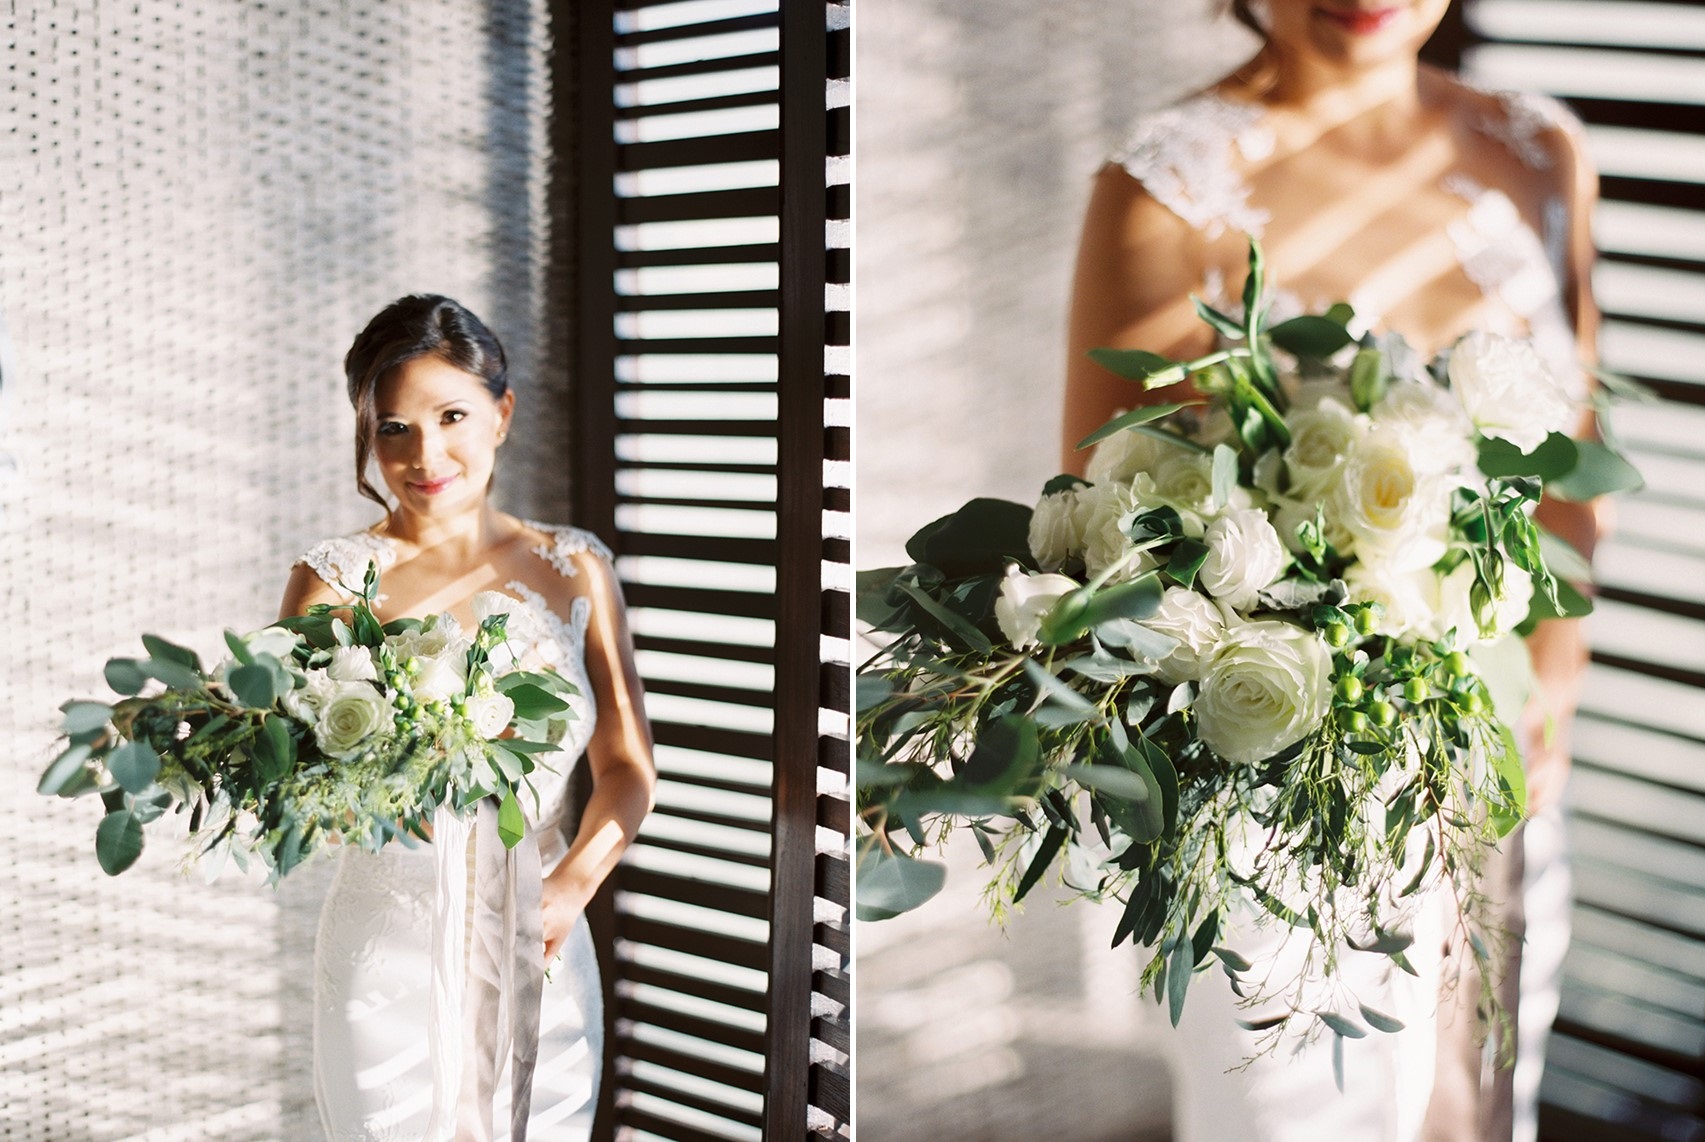 White & Greenery Bridal Bouquet